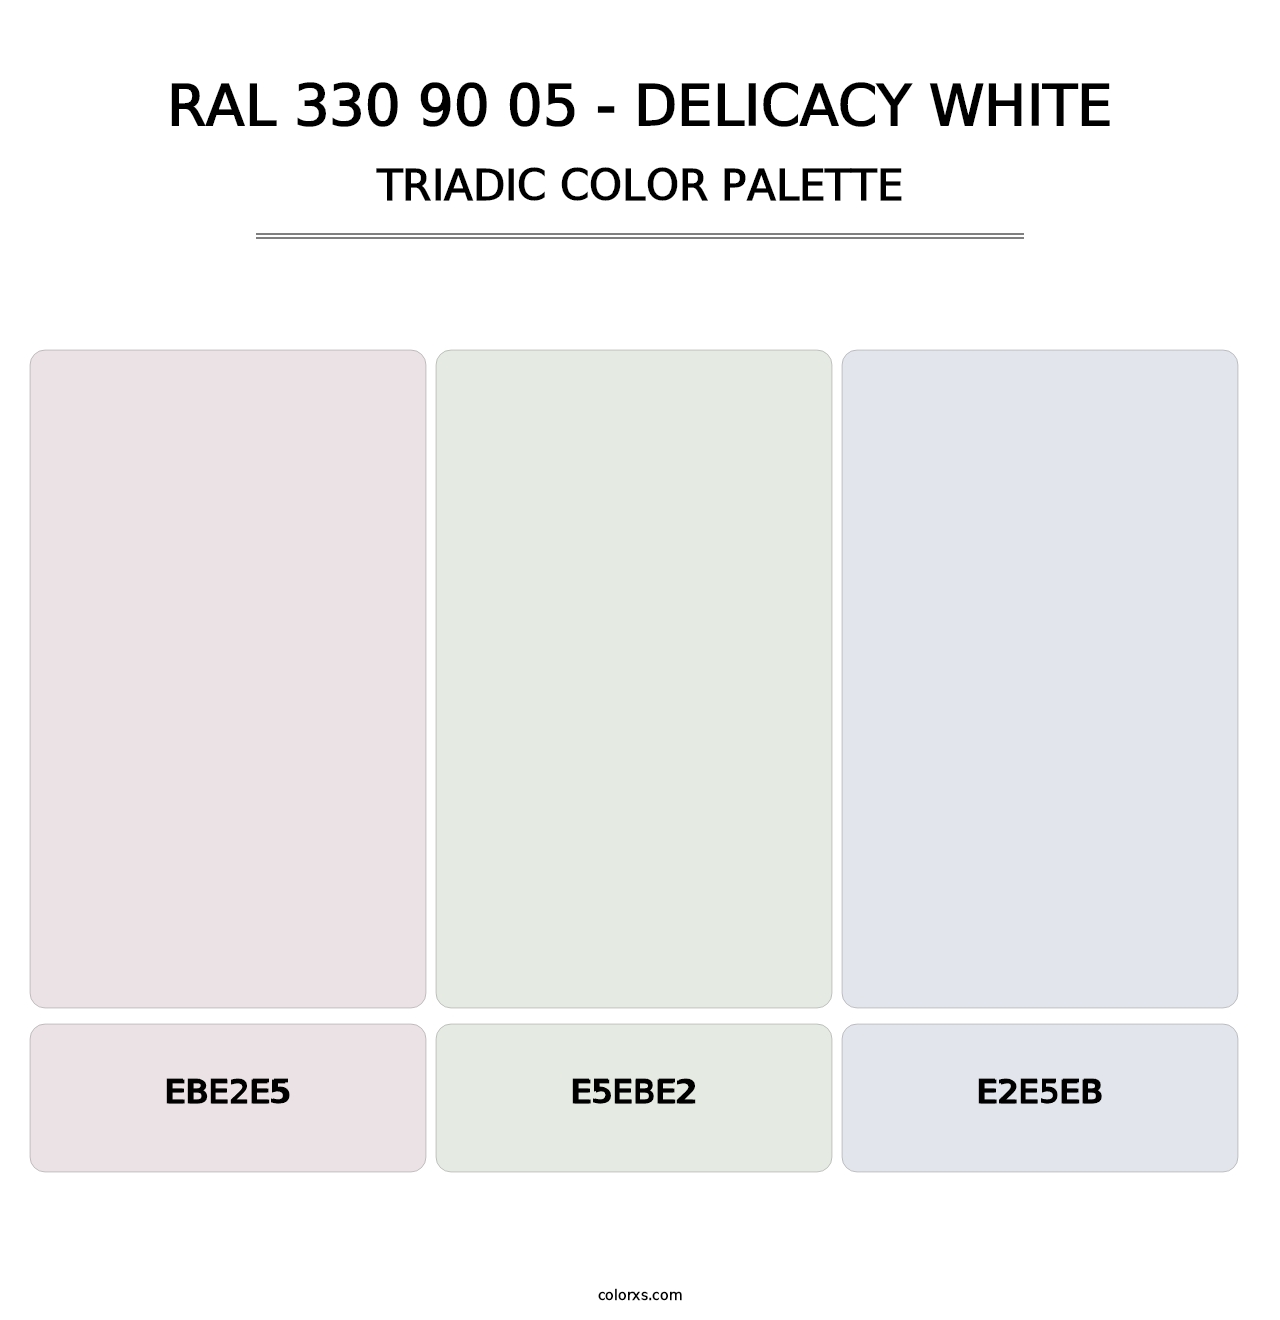 RAL 330 90 05 - Delicacy White - Triadic Color Palette